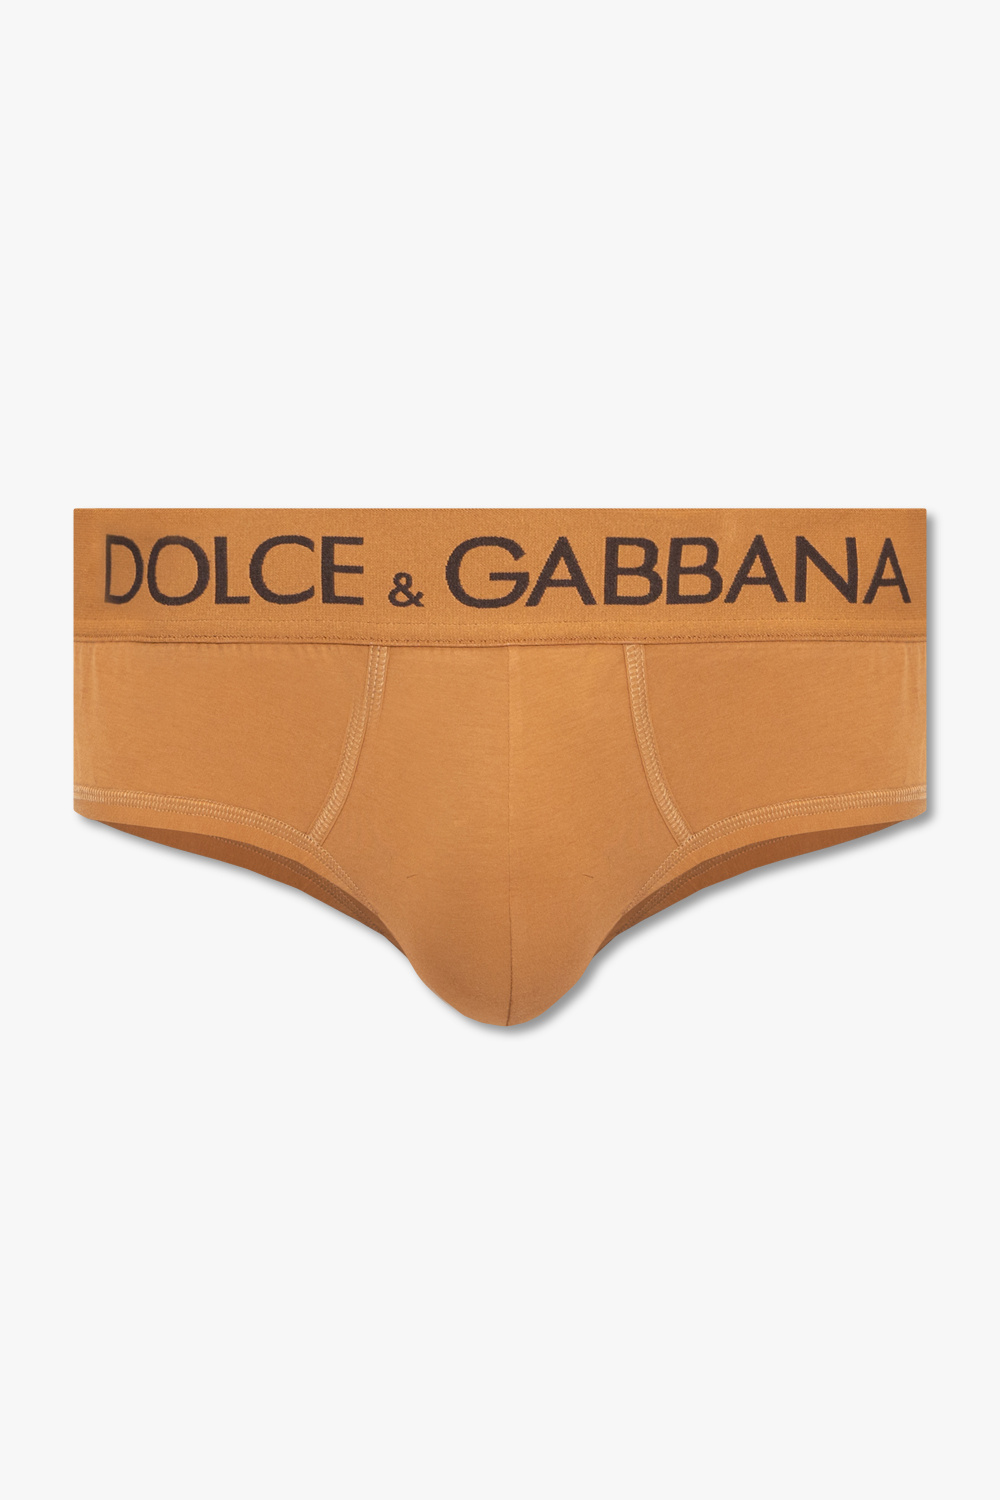 Dolce & Gabbana Briefs with logo